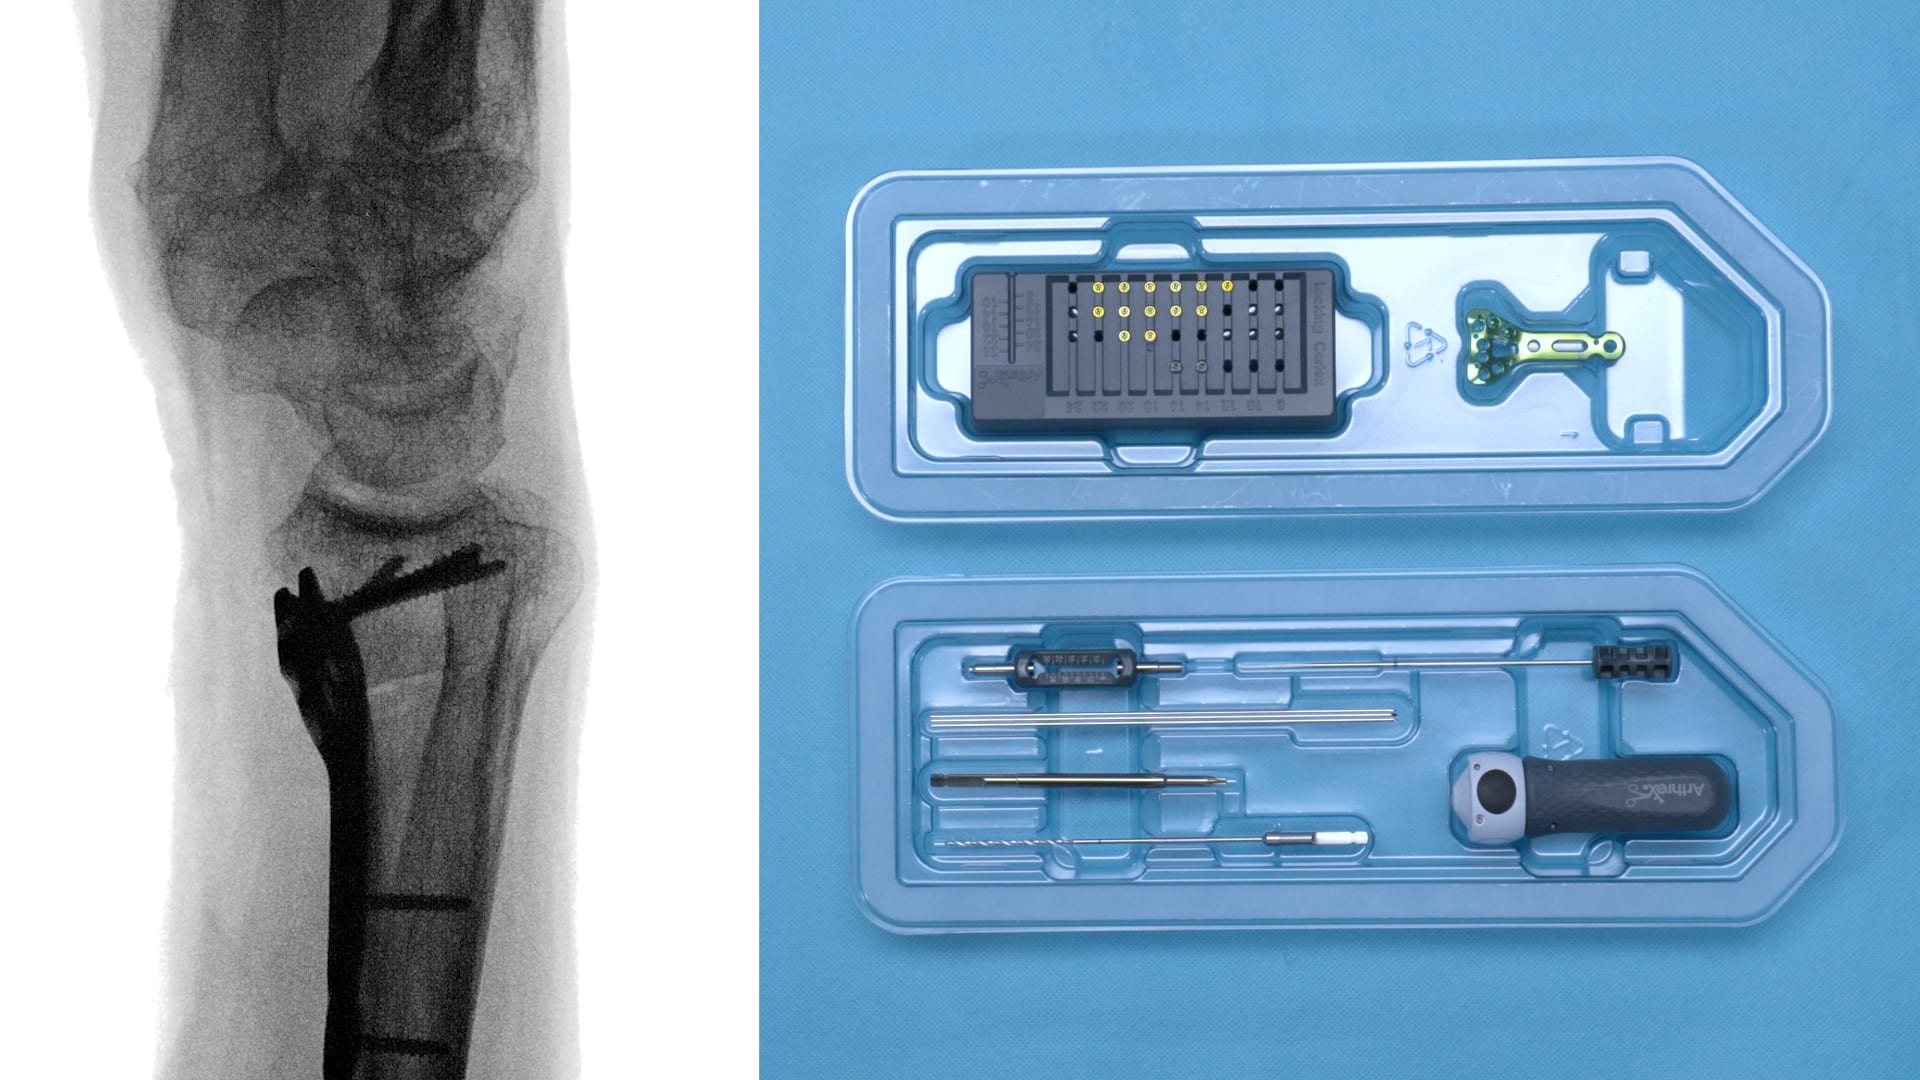 Distal Radius Fracture Fixation With the Sterile Distal Radius Implant Kit